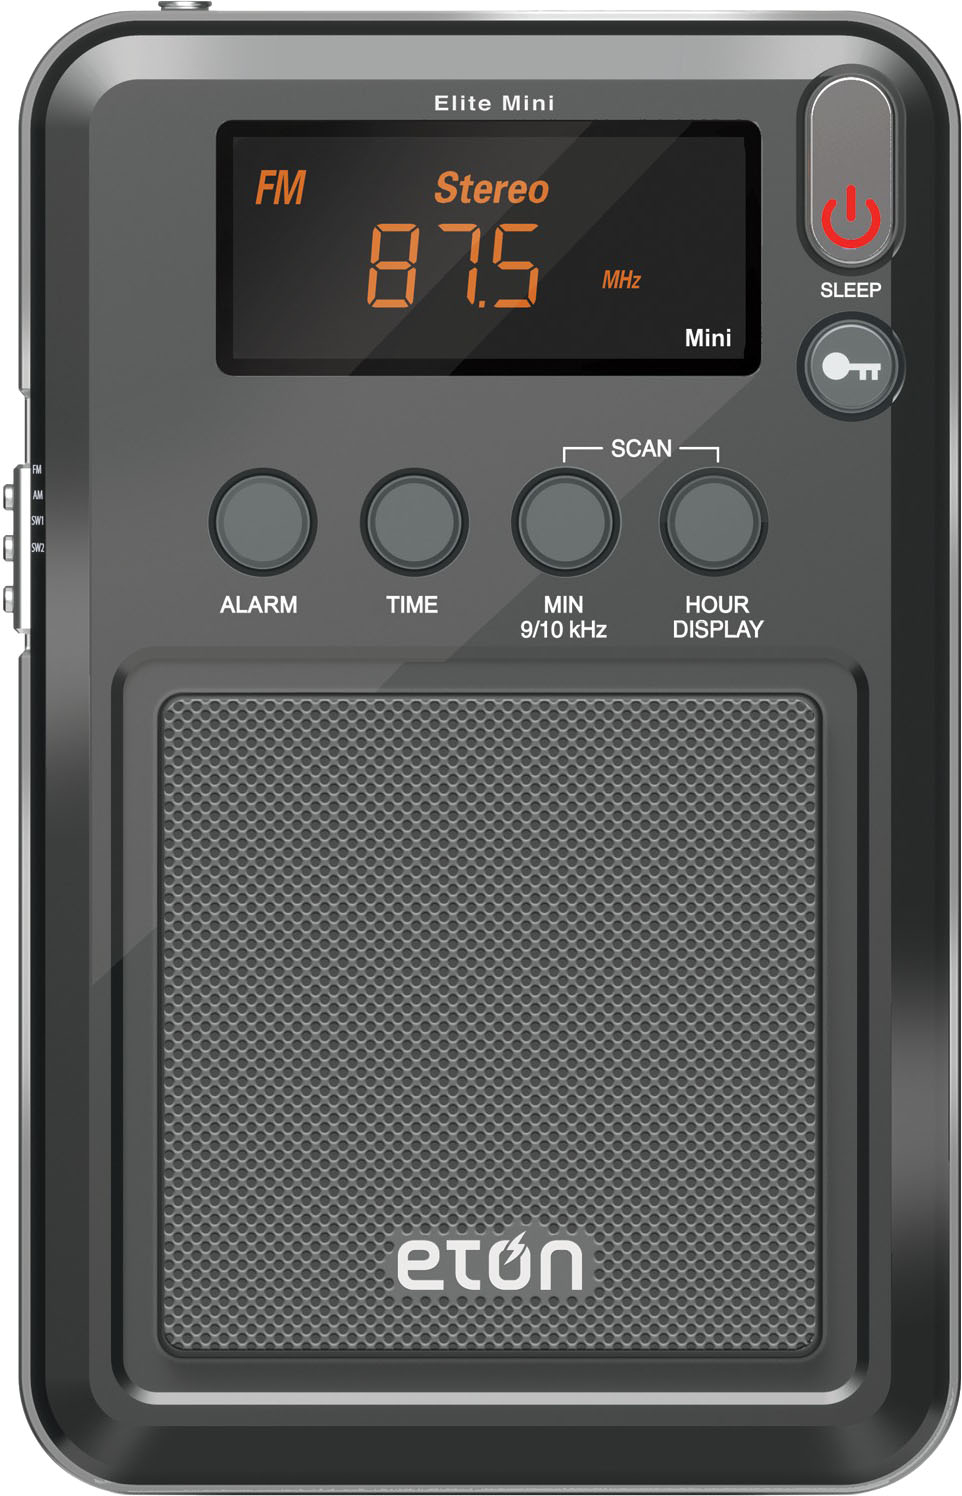  Portable Pocket Radio Classic Silver Gray Fm Mini Mini Radio  Elegant Design Compact Size Silver Grey Small Miniature for Shower Radios :  Electronics